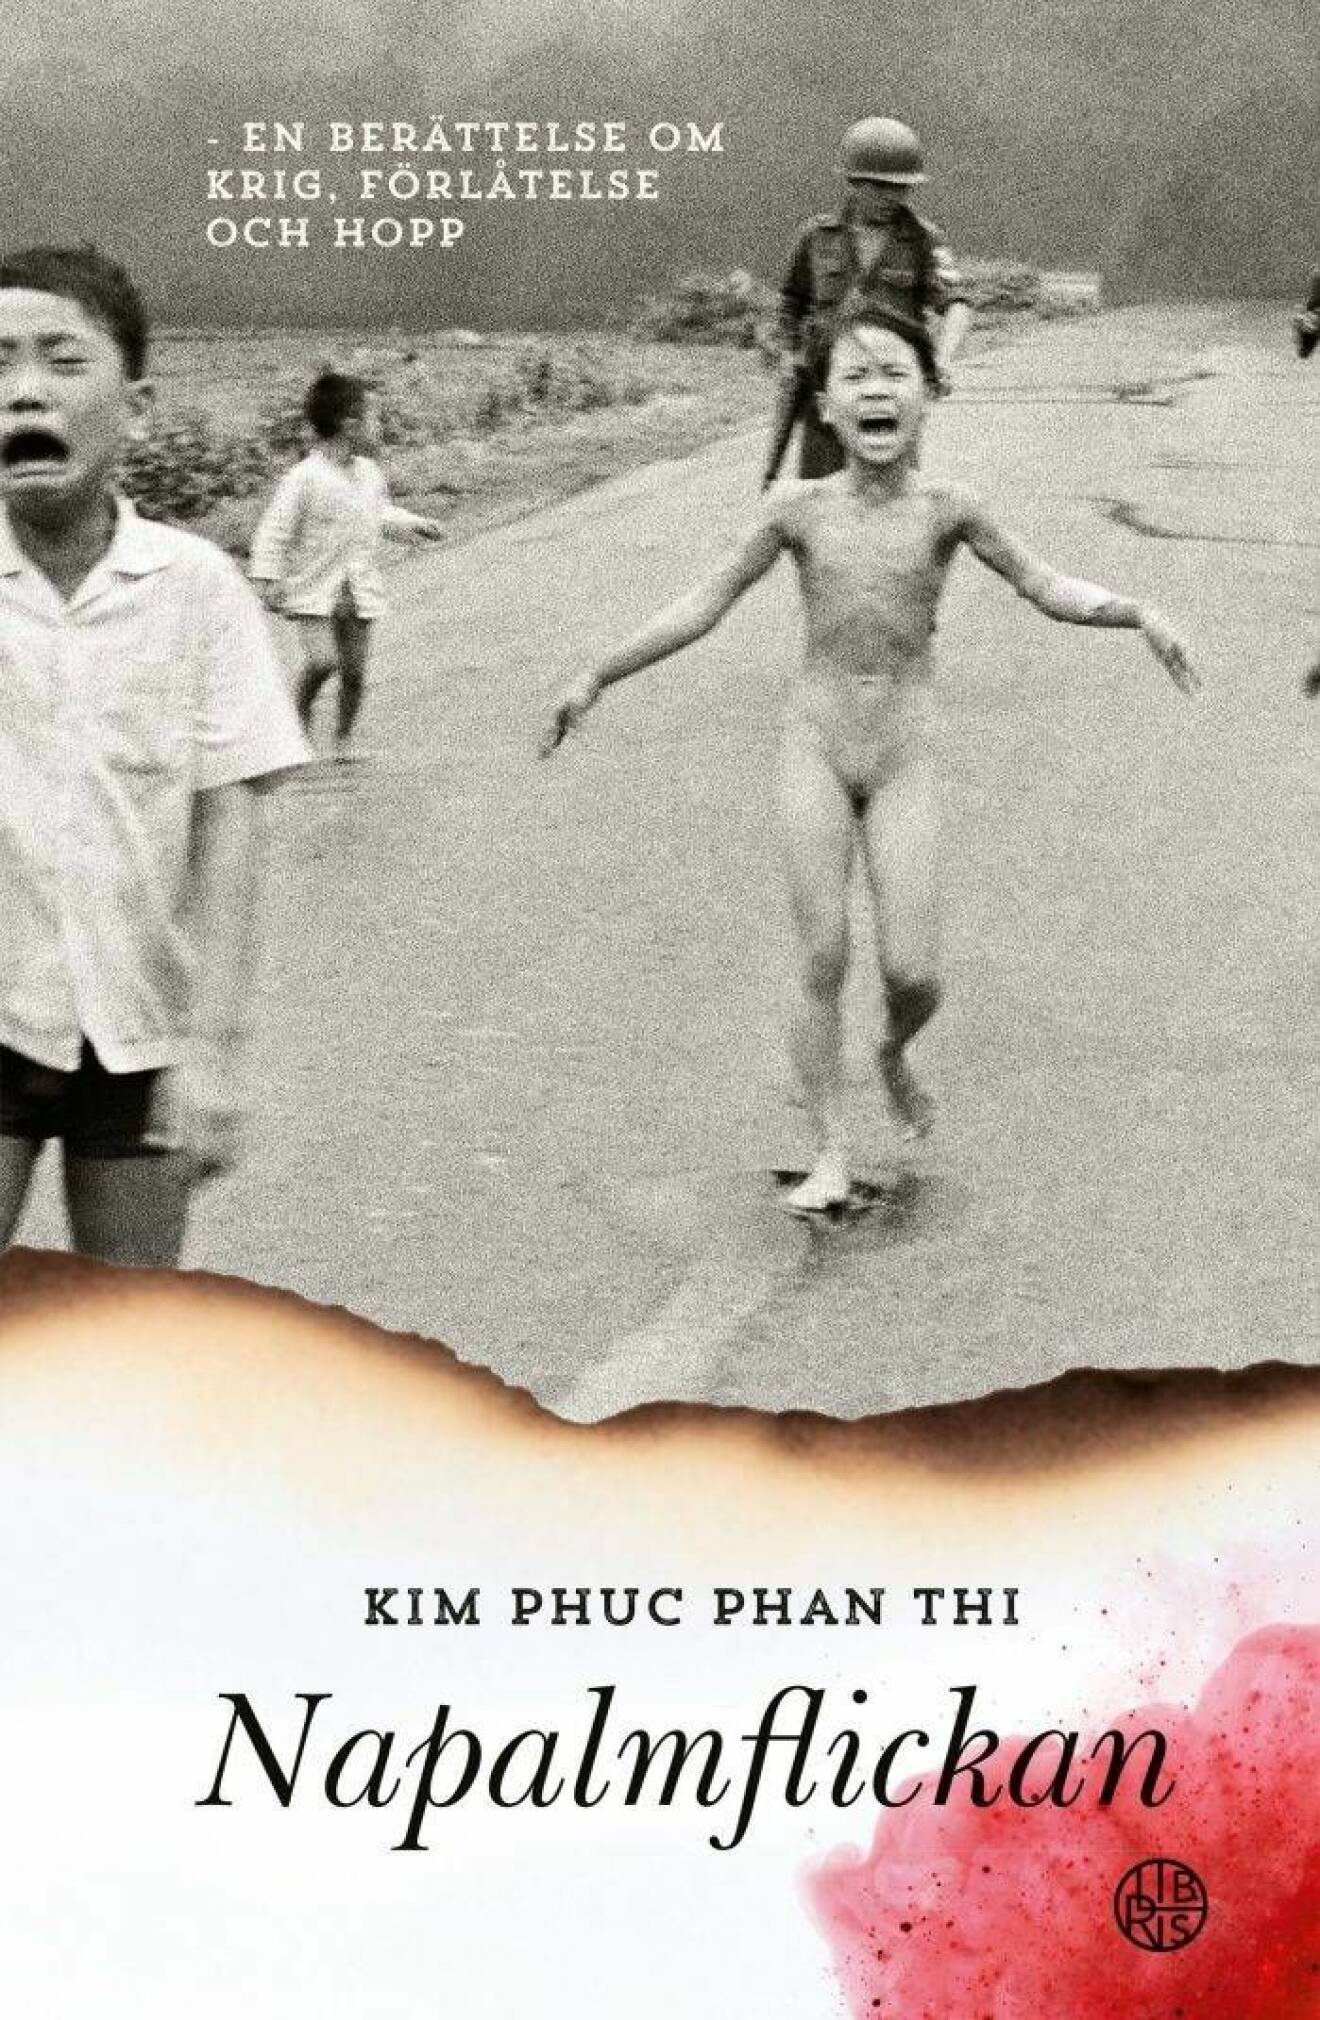 Bokomslag på Kim Phucs bok Napalmflickan.